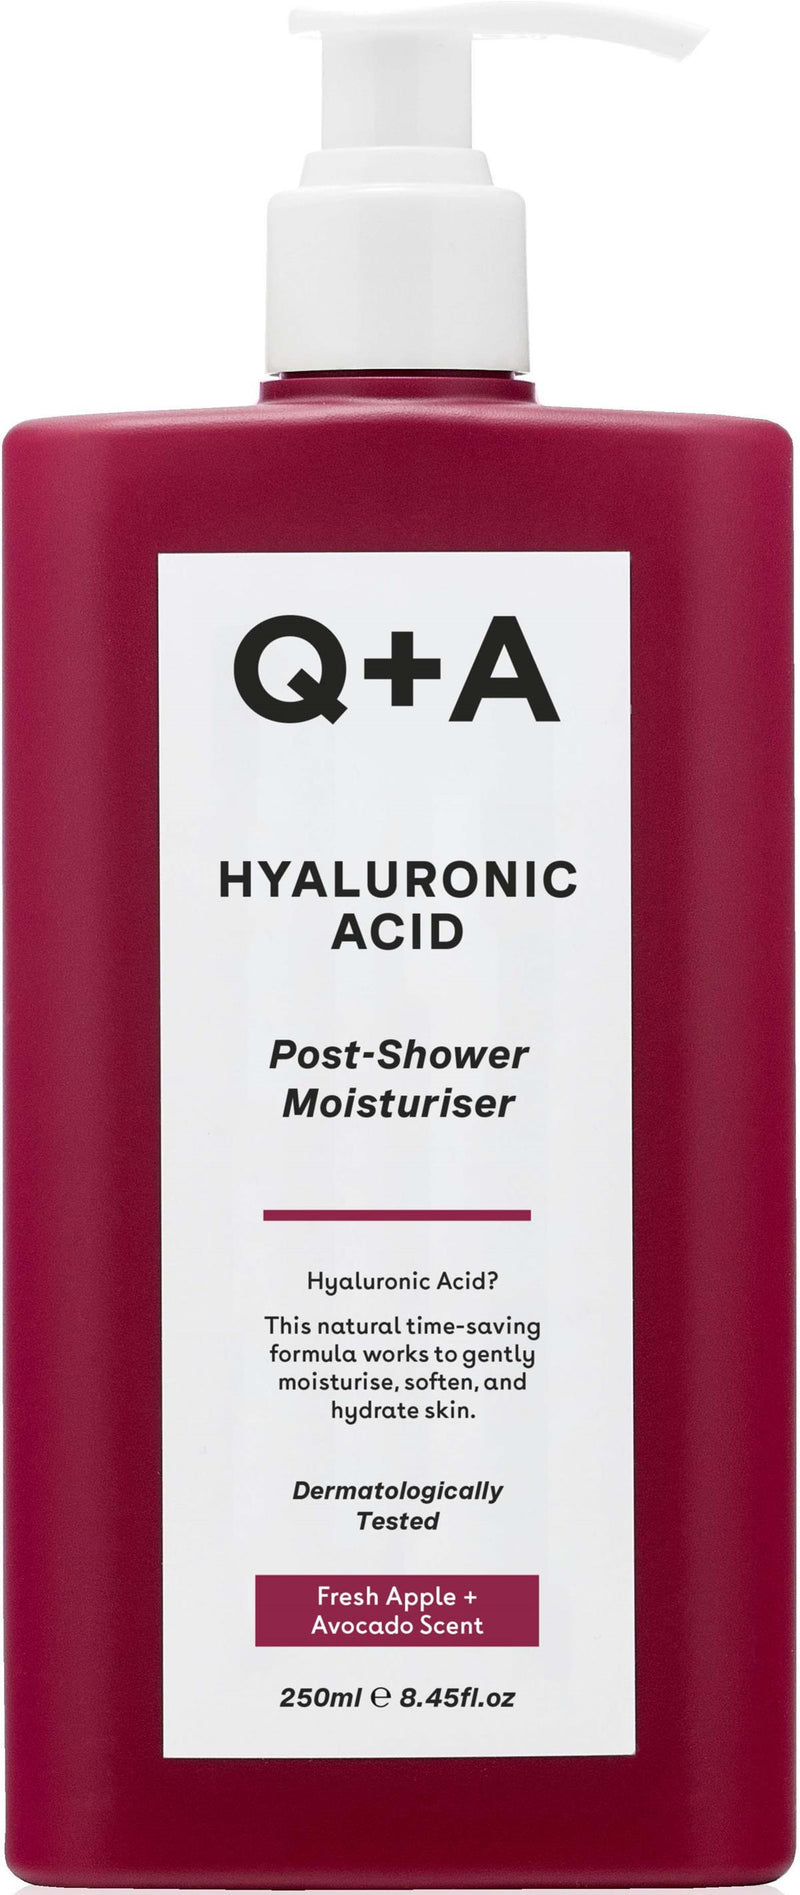 Q+A Hyaluronic Acid Post-Shower Moisturizer Moisturizing body cream with hyaluronic acid, 250ml